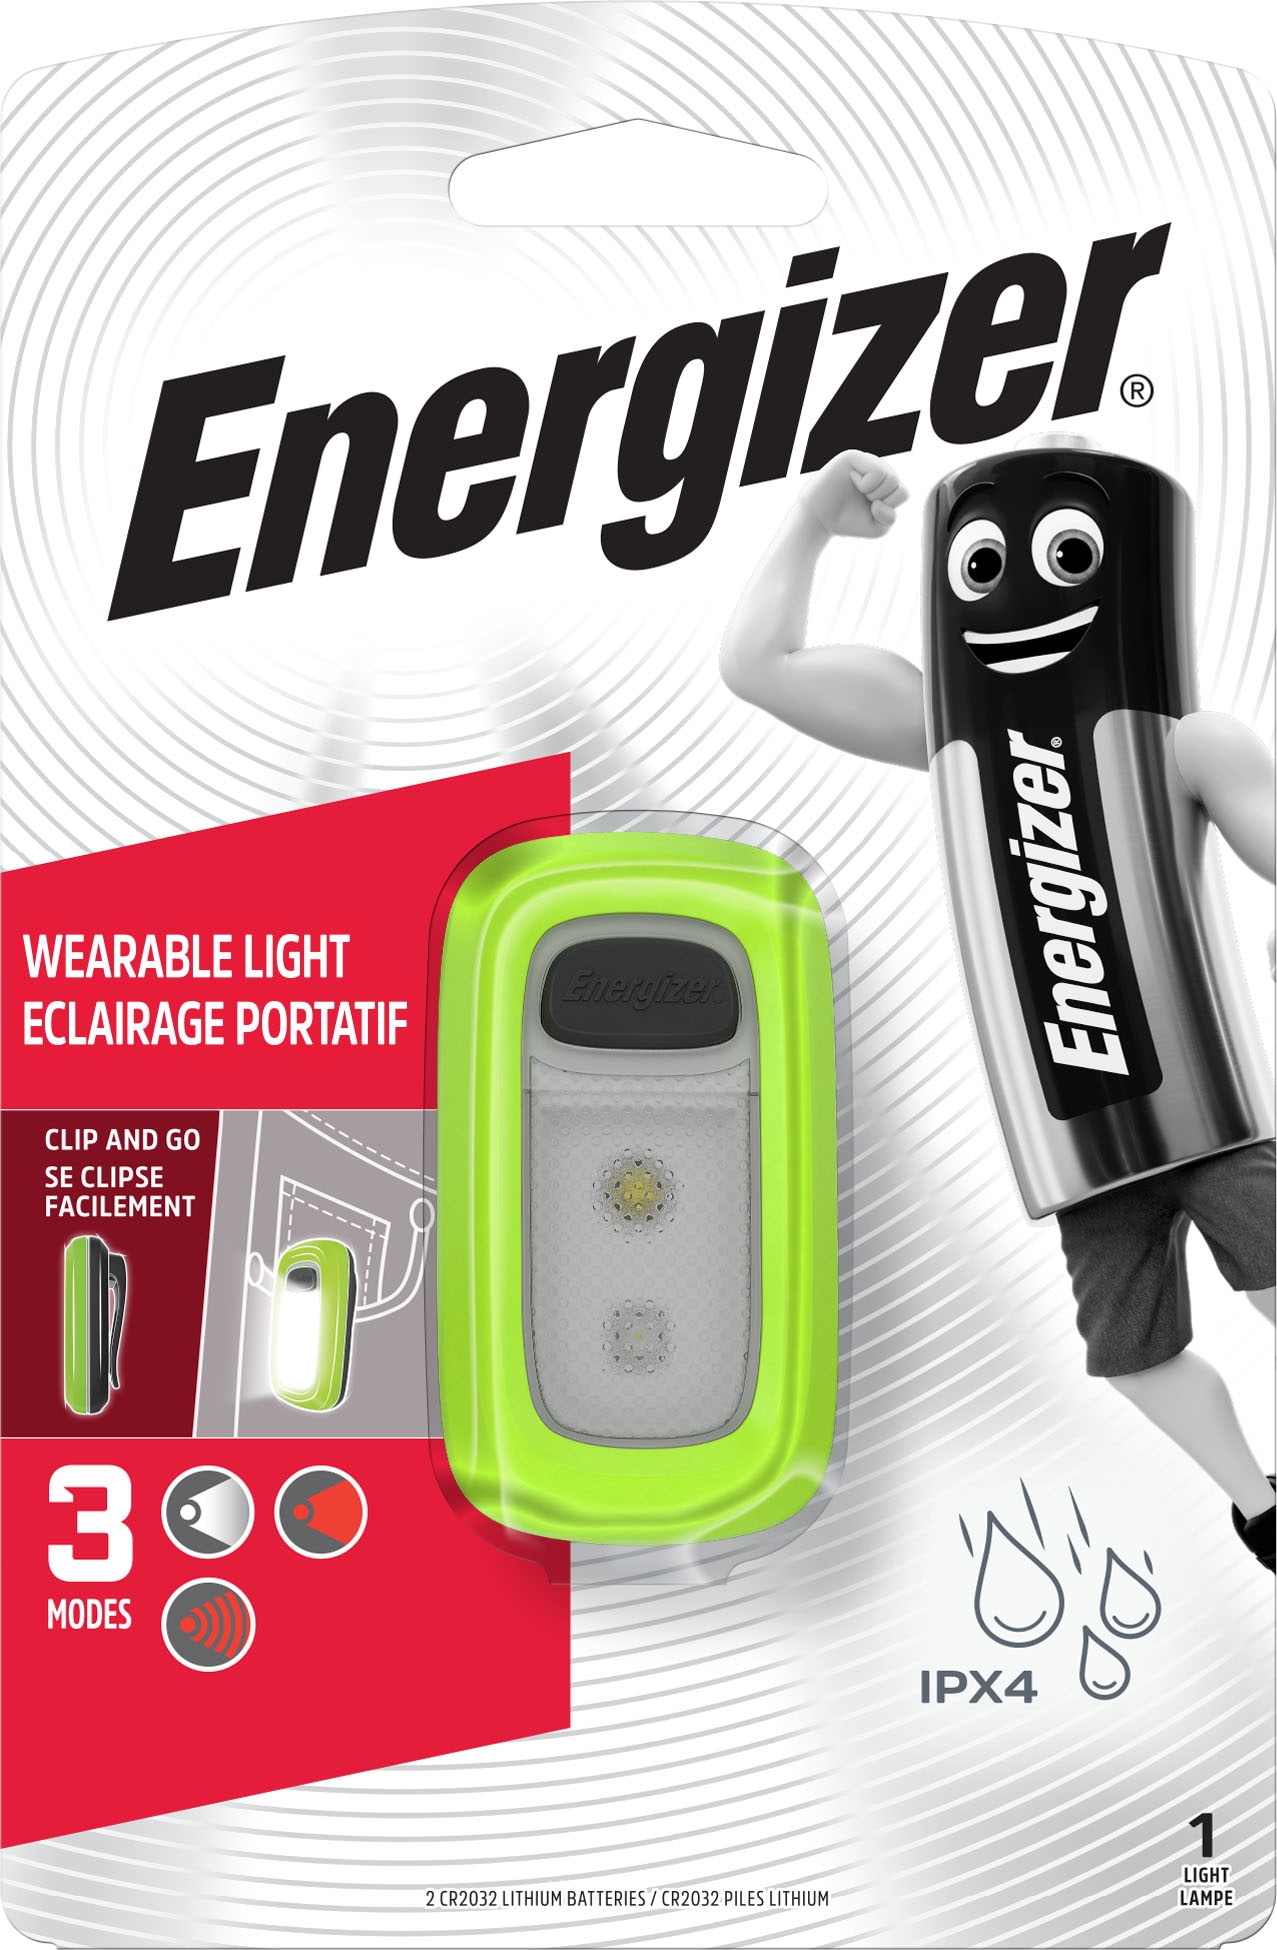 jetzt Clip Klemmleuchte kaufen »Wearable Light« Energizer